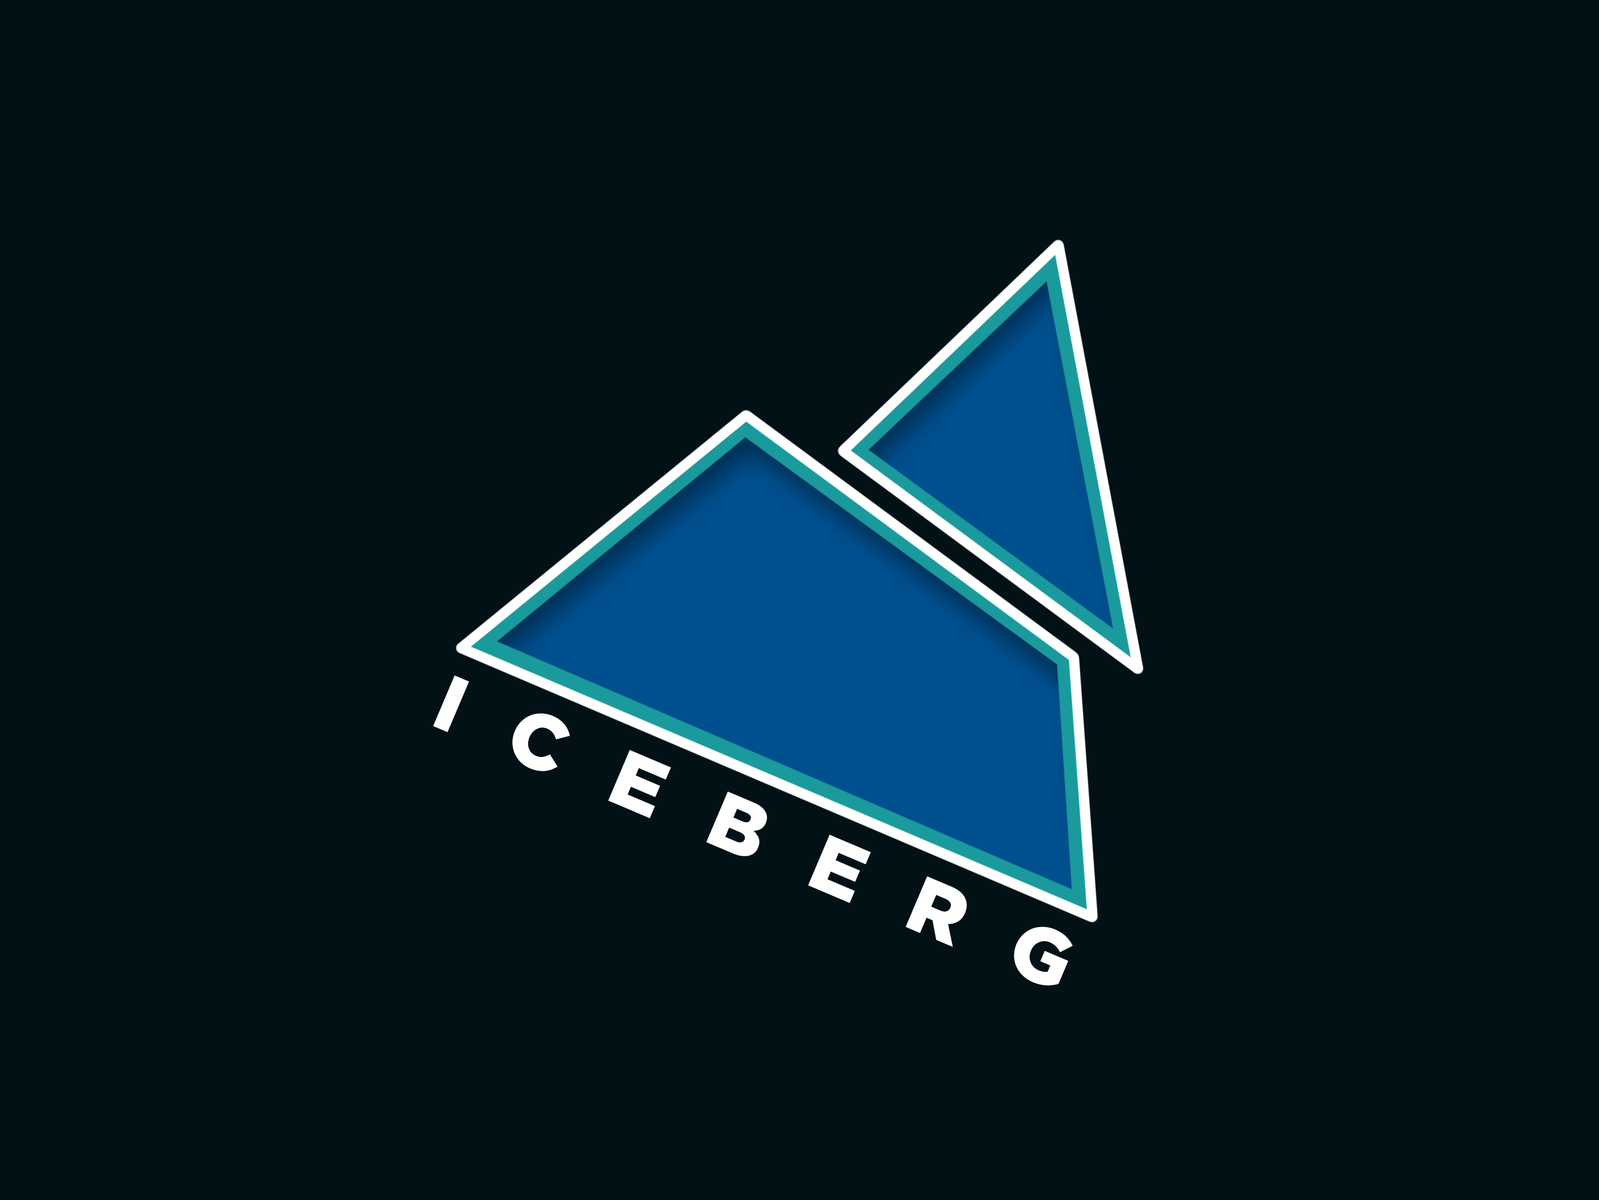 iceberg by A. Aleksey on Dribbble